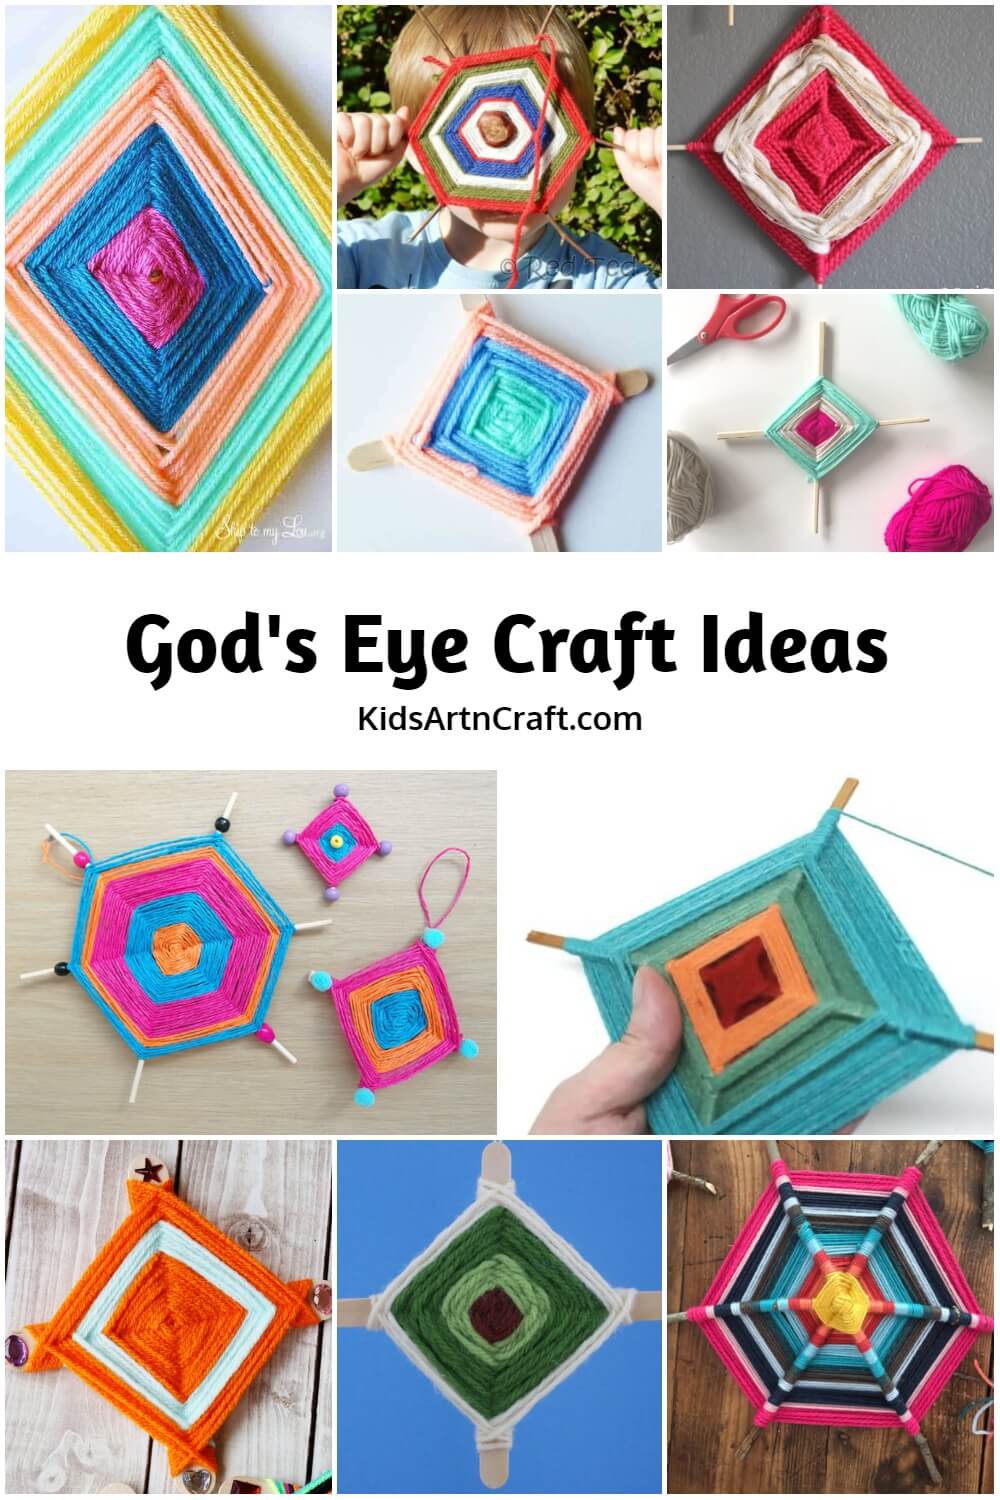 God's Eye Craft Ideas